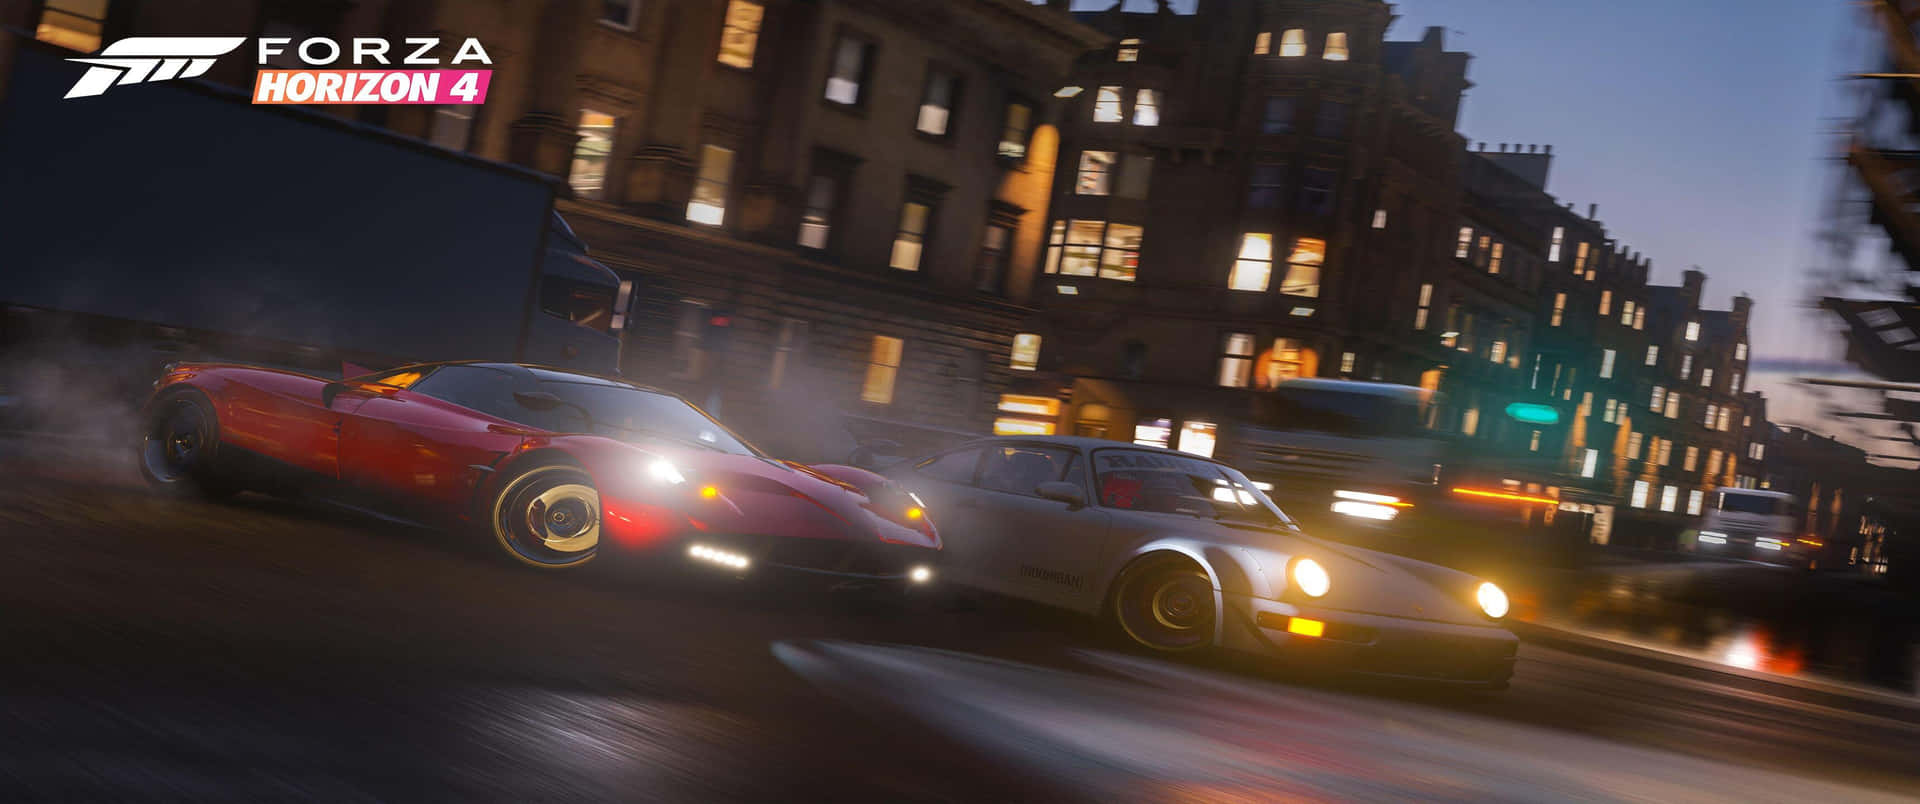 3440x1440p Racing At Night Forza Horizon 4 Background